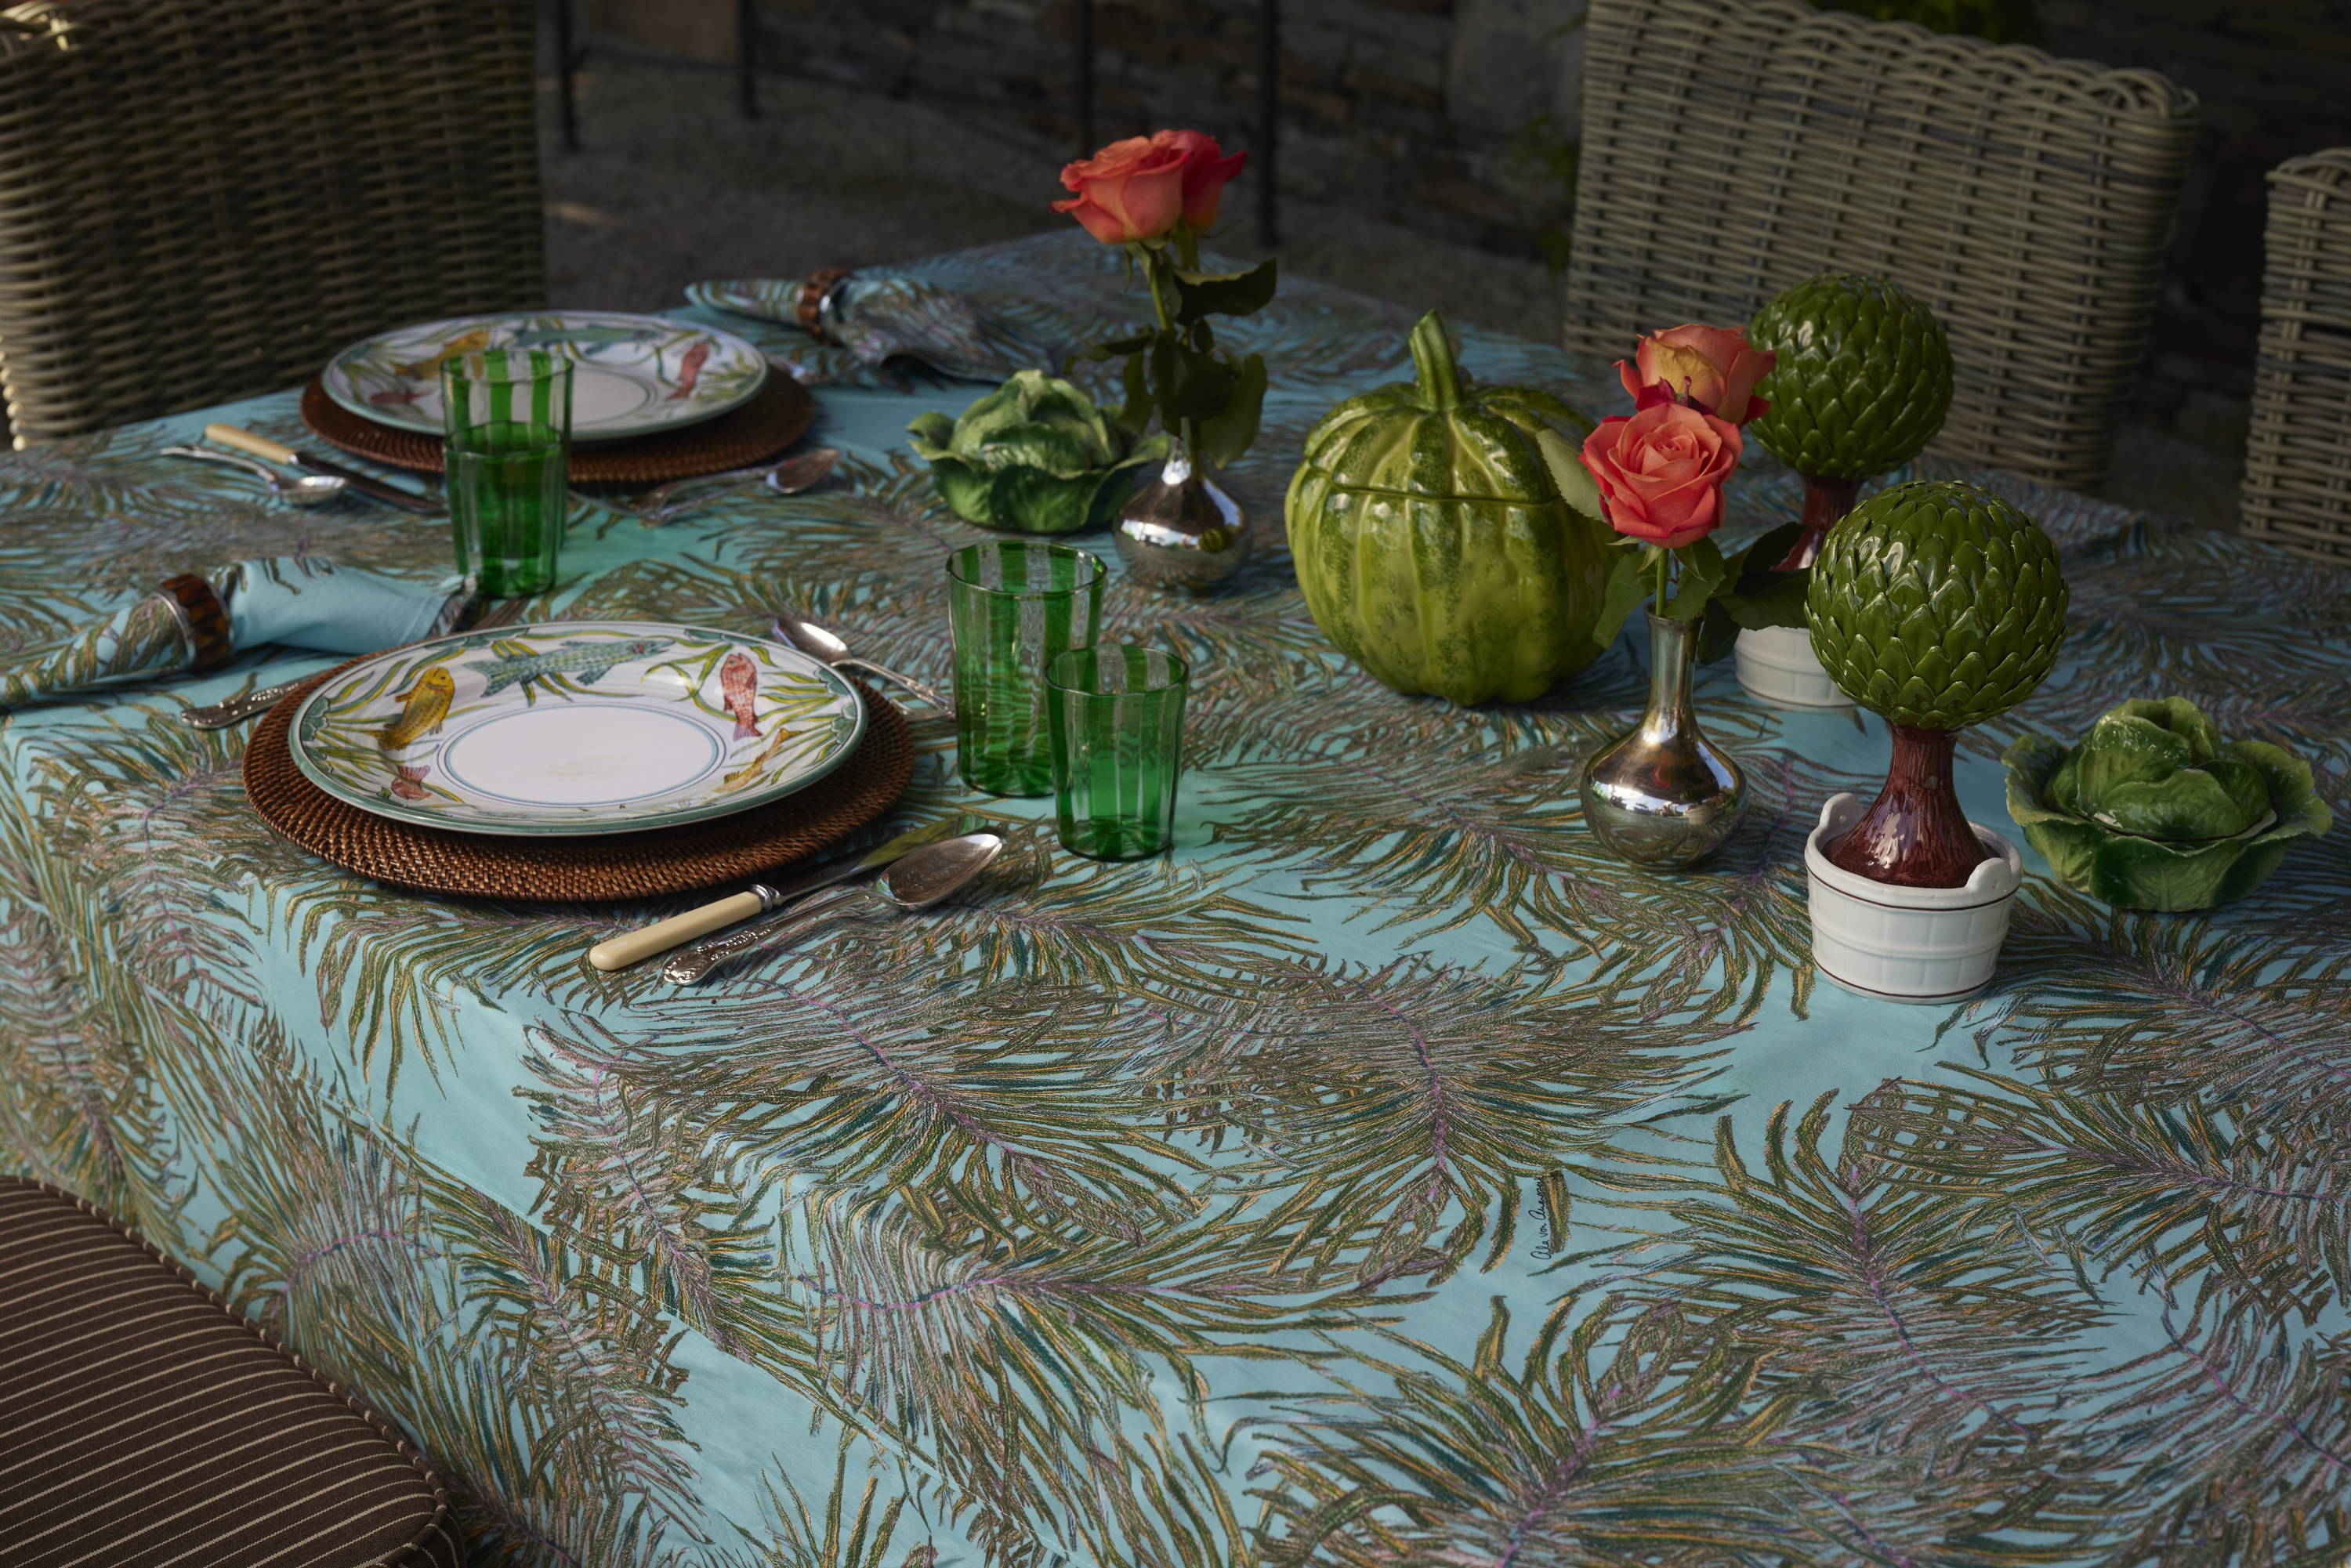 Green palm leaf printed cotton table cloth by Ala von Auersperg in Newport Rhode Island